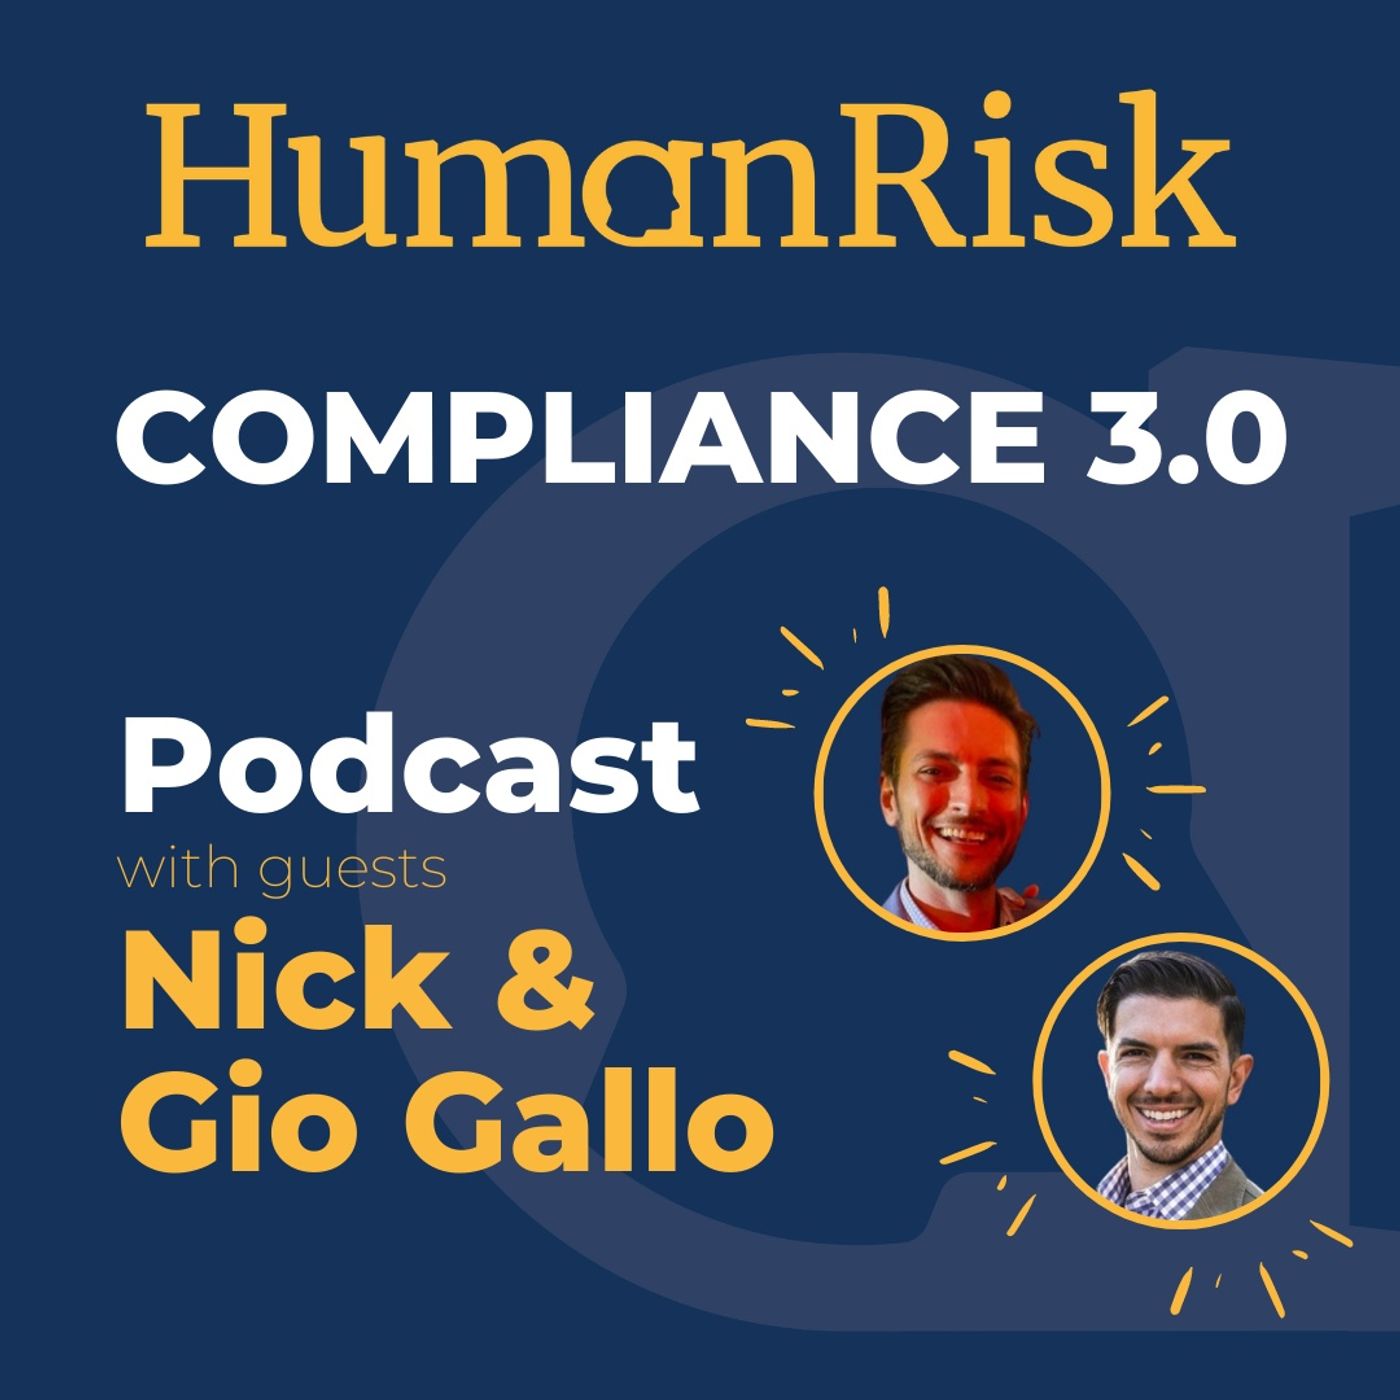 Nick & Gio Gallo on Compliance 3.0